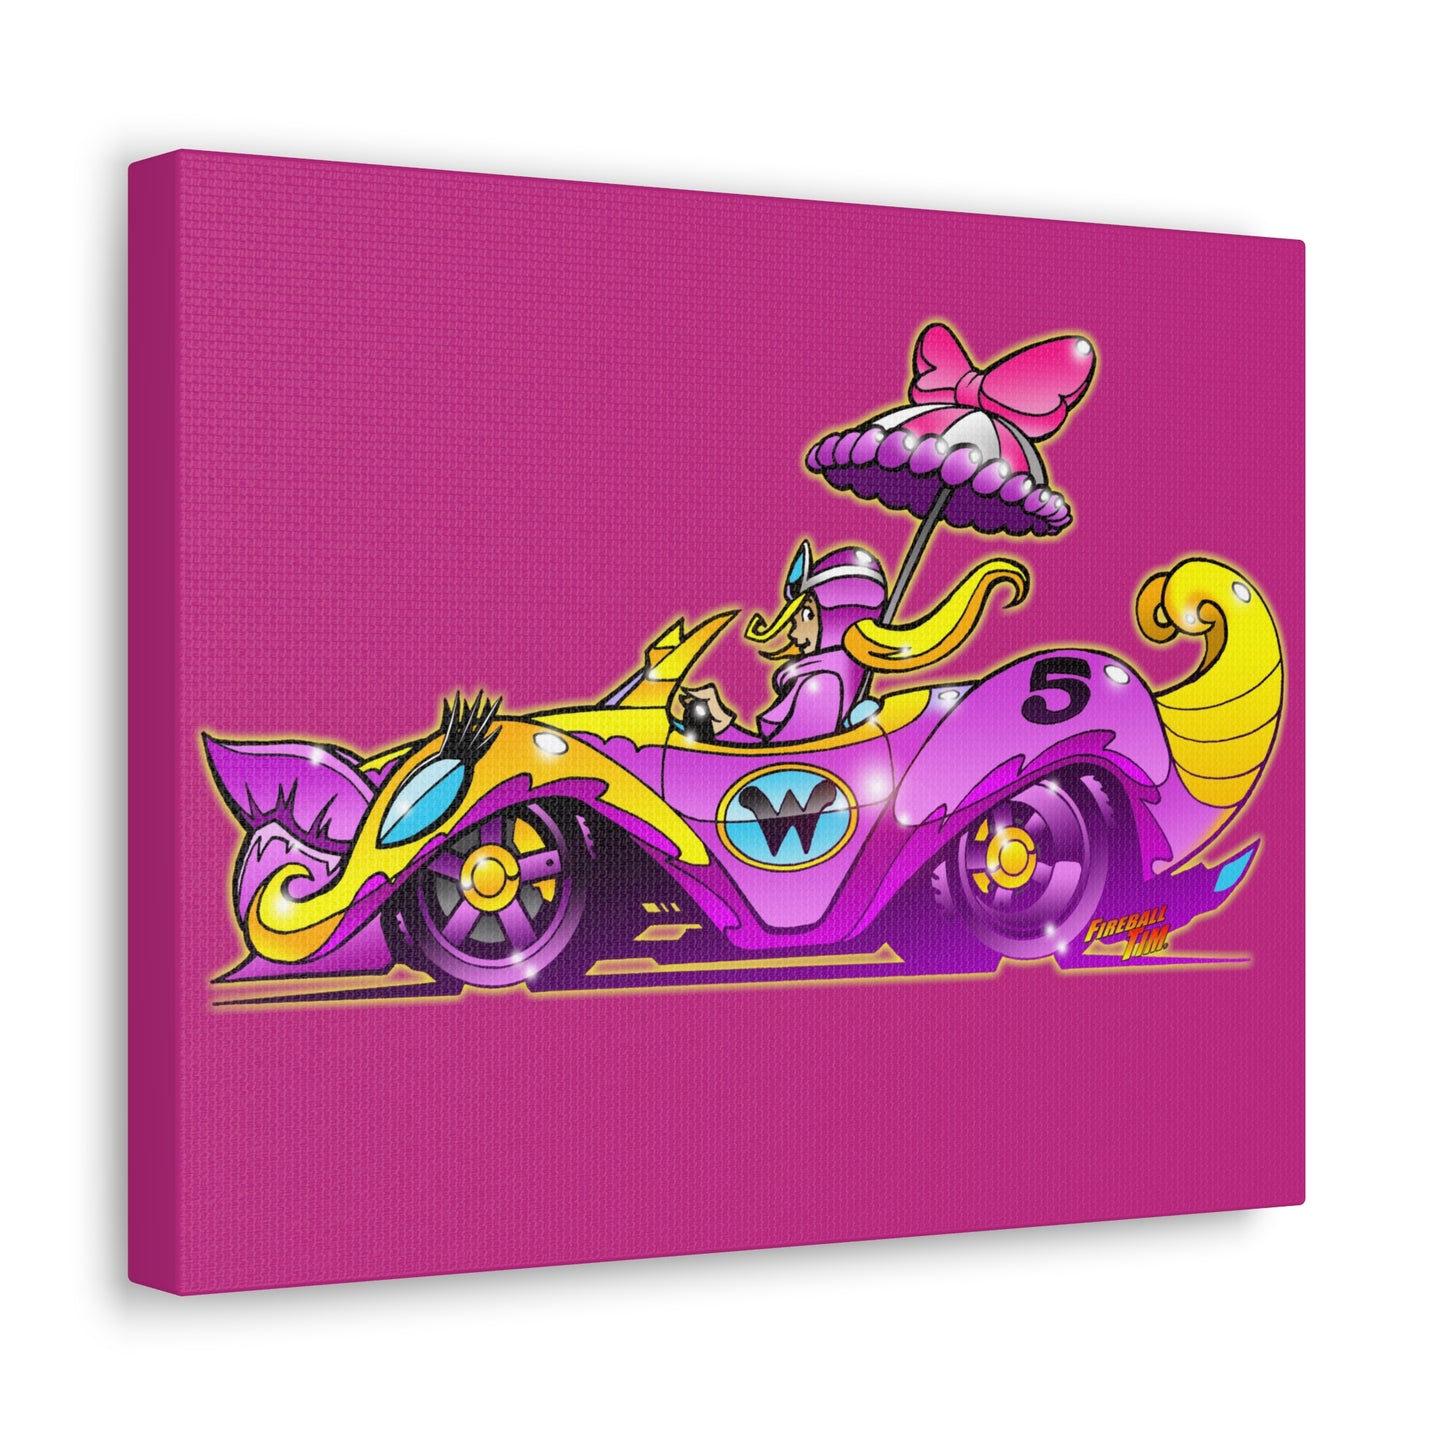 PENELOPE PITSTOP Wacky Racers Compact Pussycat Cartoon Car Canvas Gallery Art Print 11x14